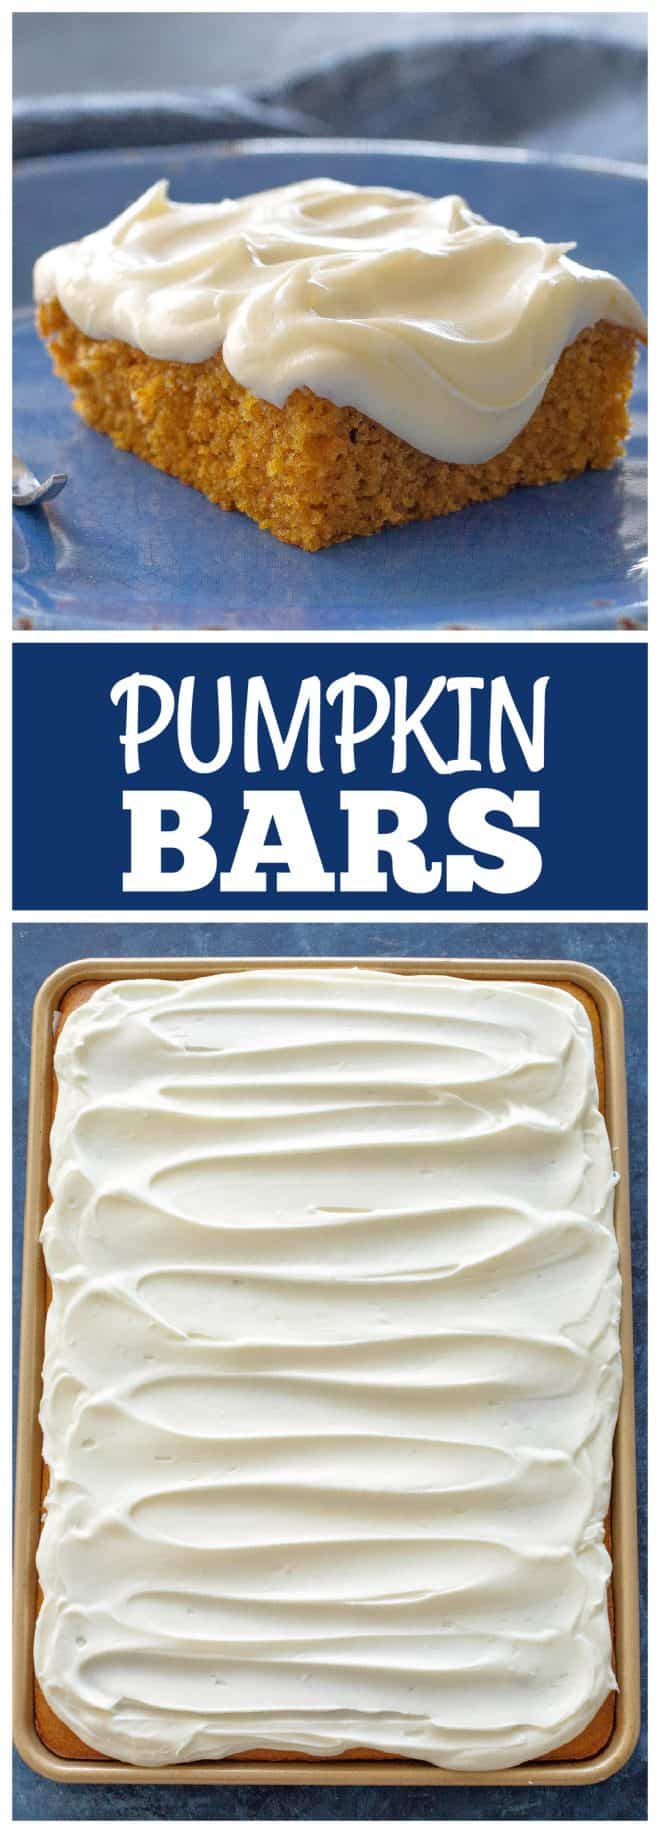 pumpkin bars - Pumpkin Bar